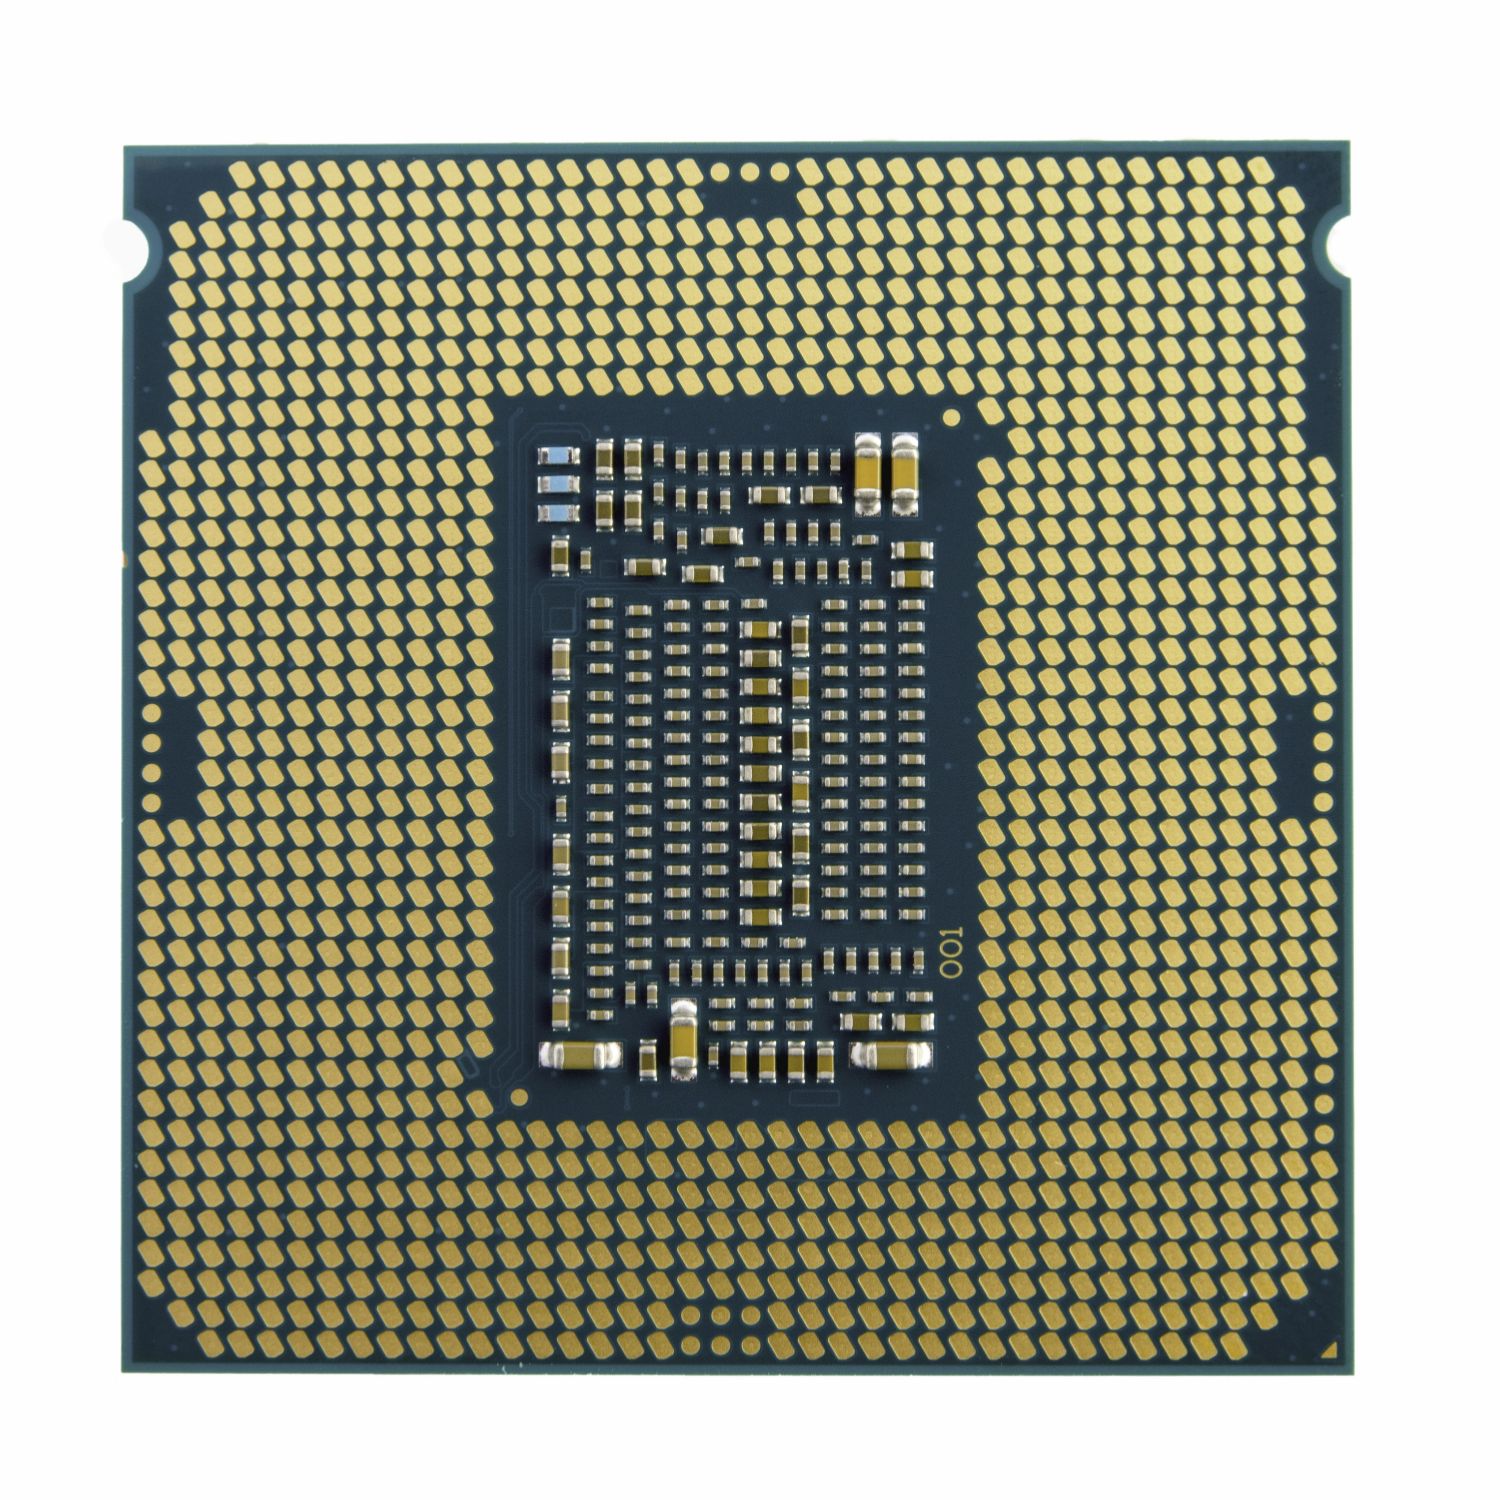 BX8070110900 - Intel Core i9-10900 LGA1200 2.8GHz 20Mb (BX8070110900) 